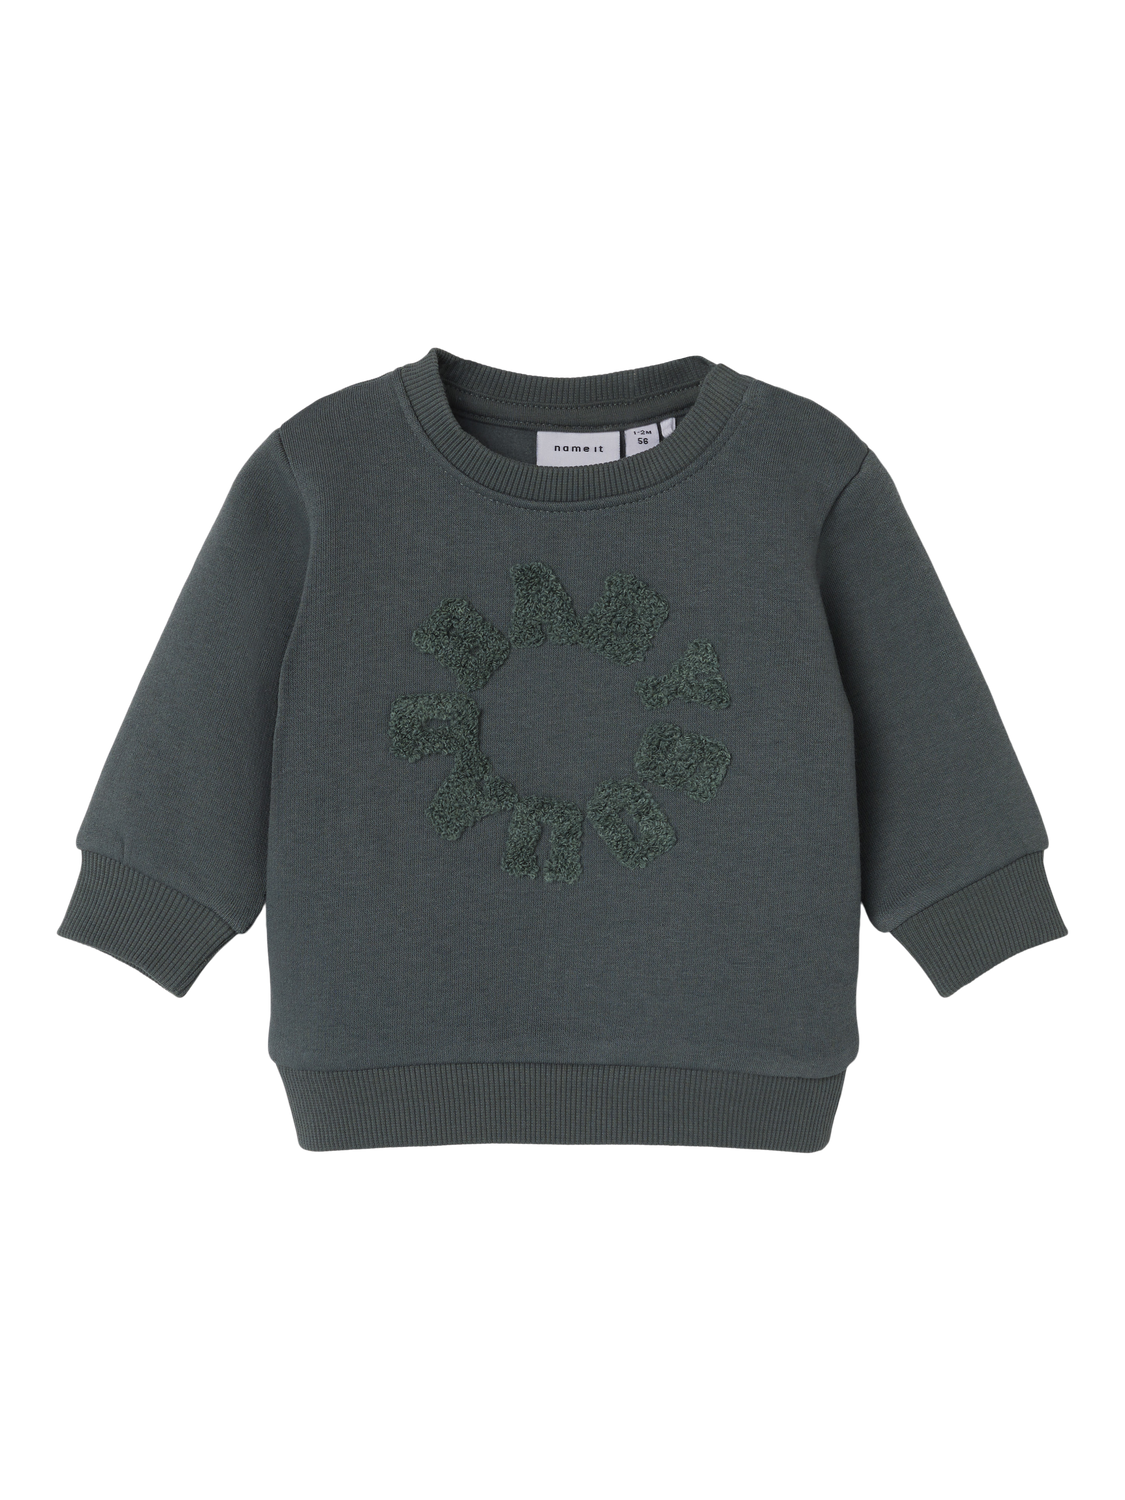 Plus City Sweatshirts – NBMORLANDO Name Green Balsam It -